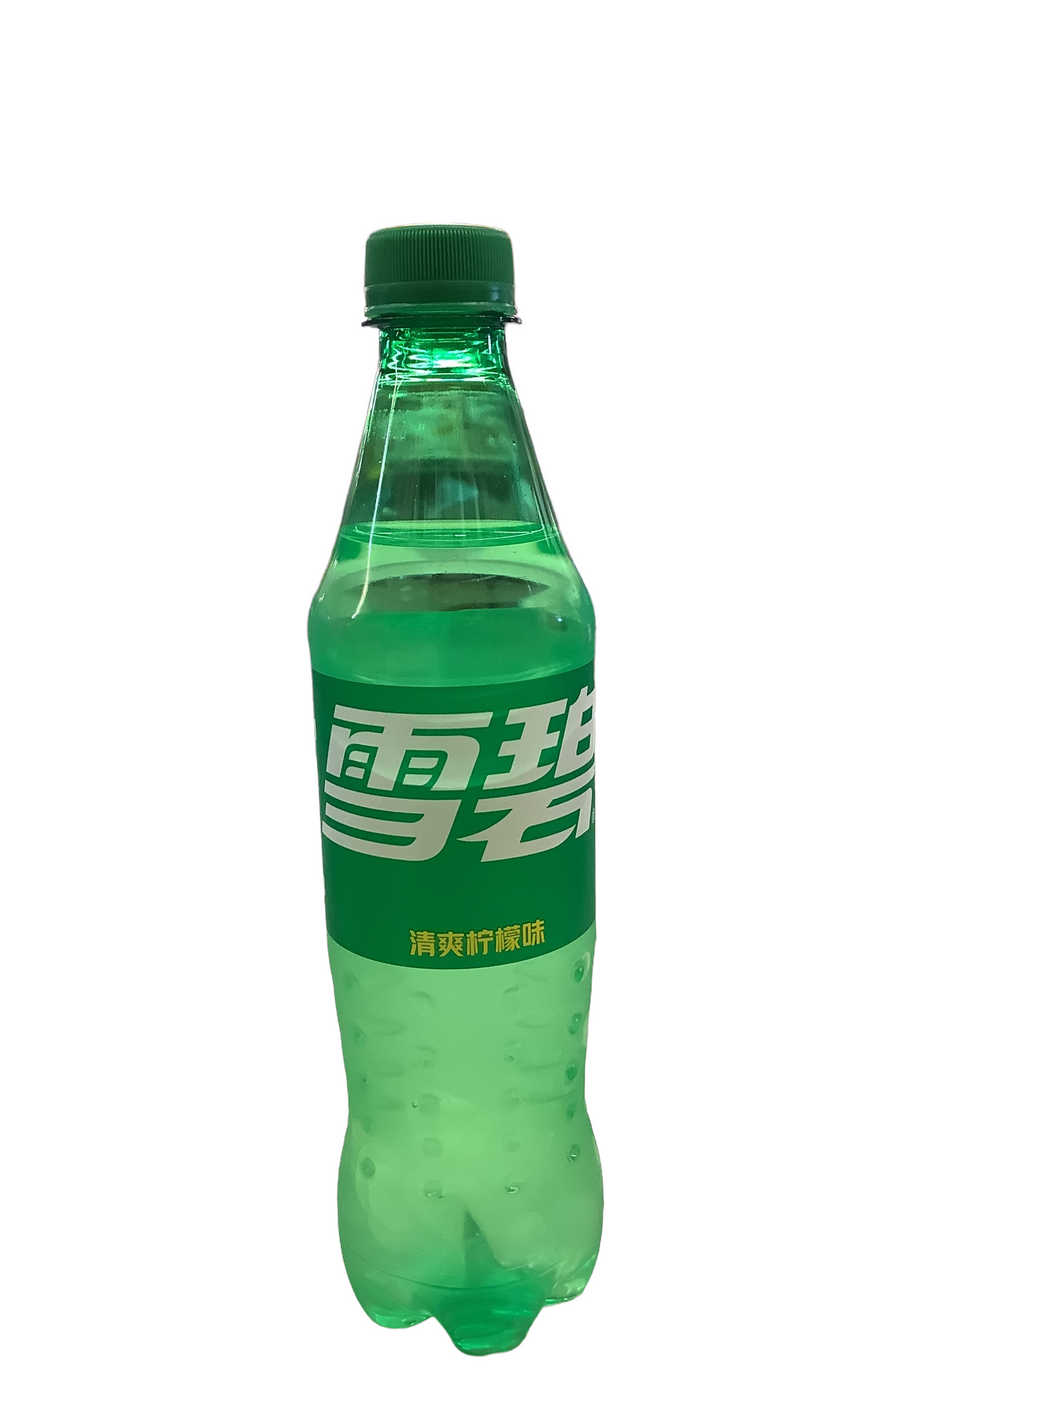 Chinese Sprite Soda